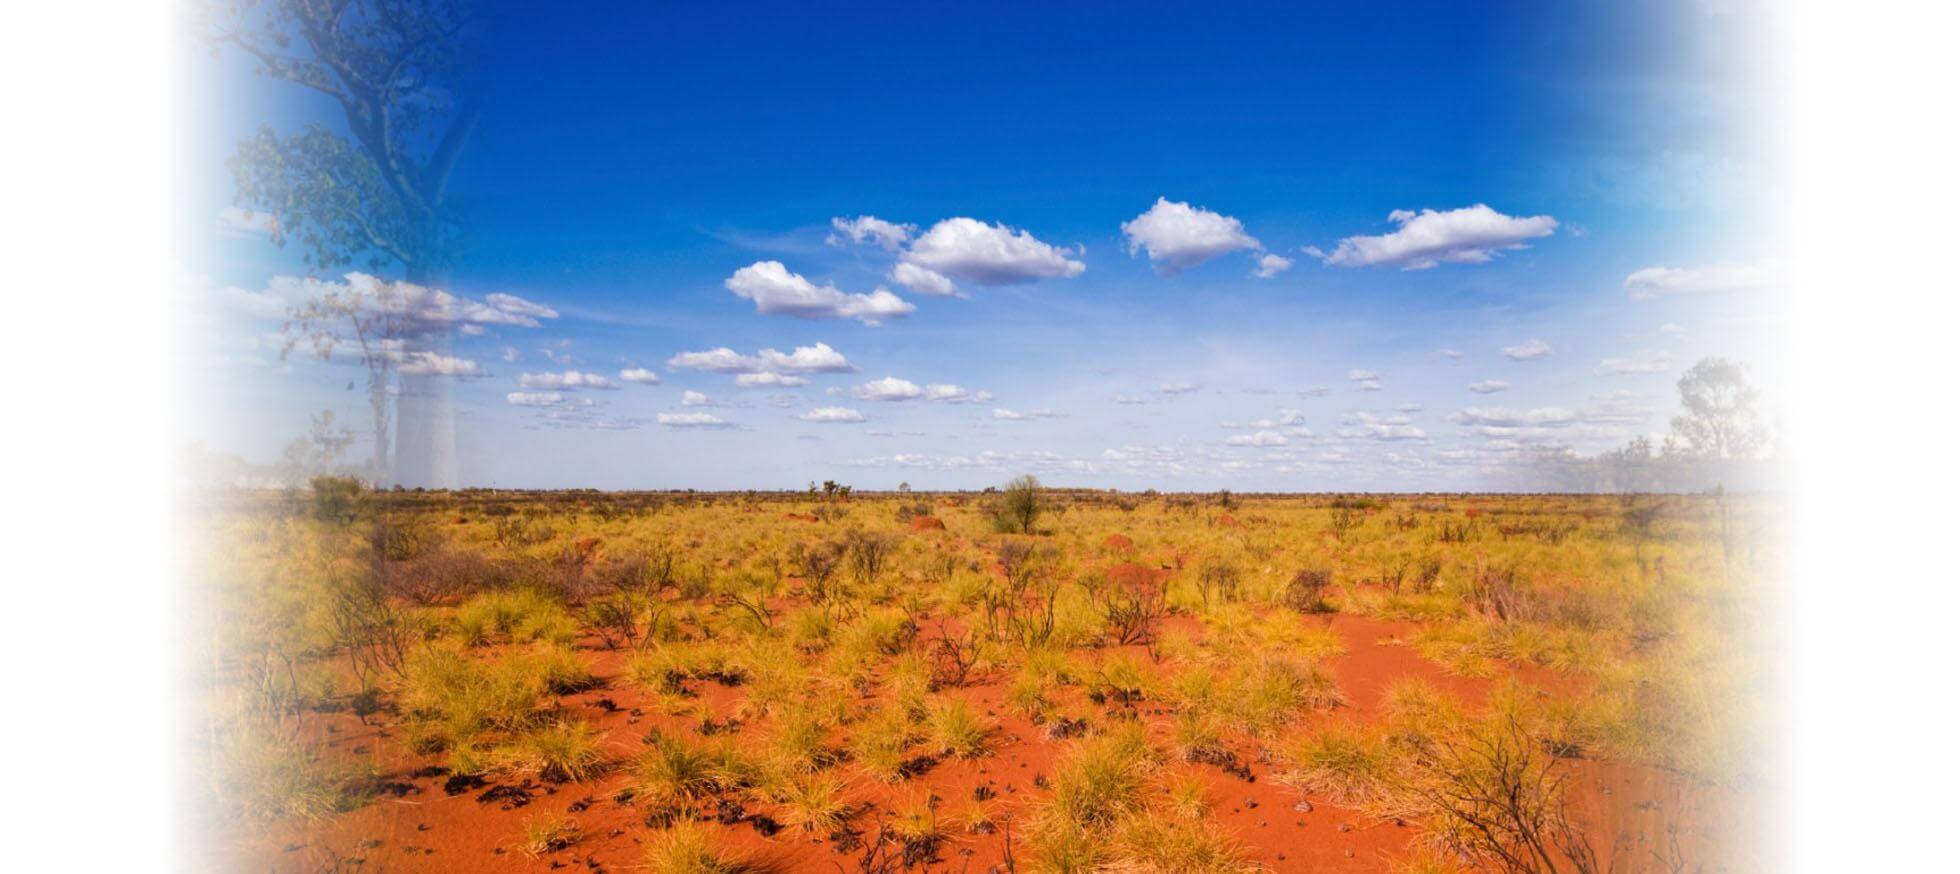 WA Outback view